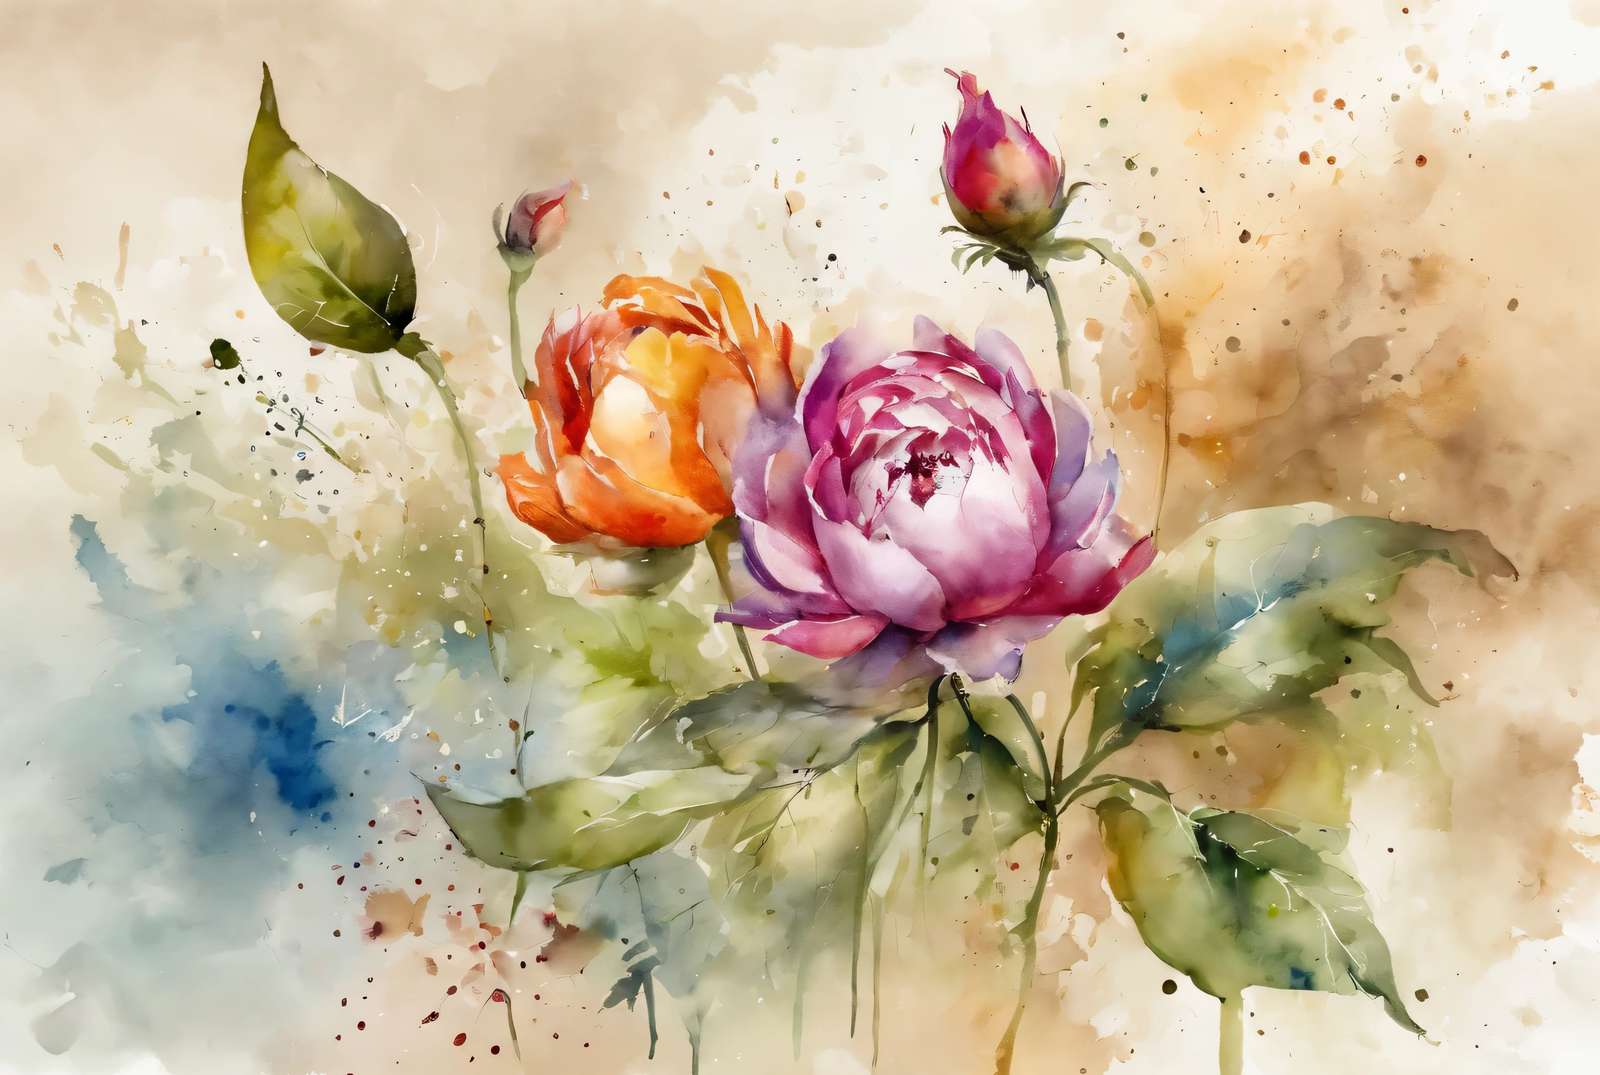 Bloemen - Mooie pioenrozen of rozen? legpuzzel online